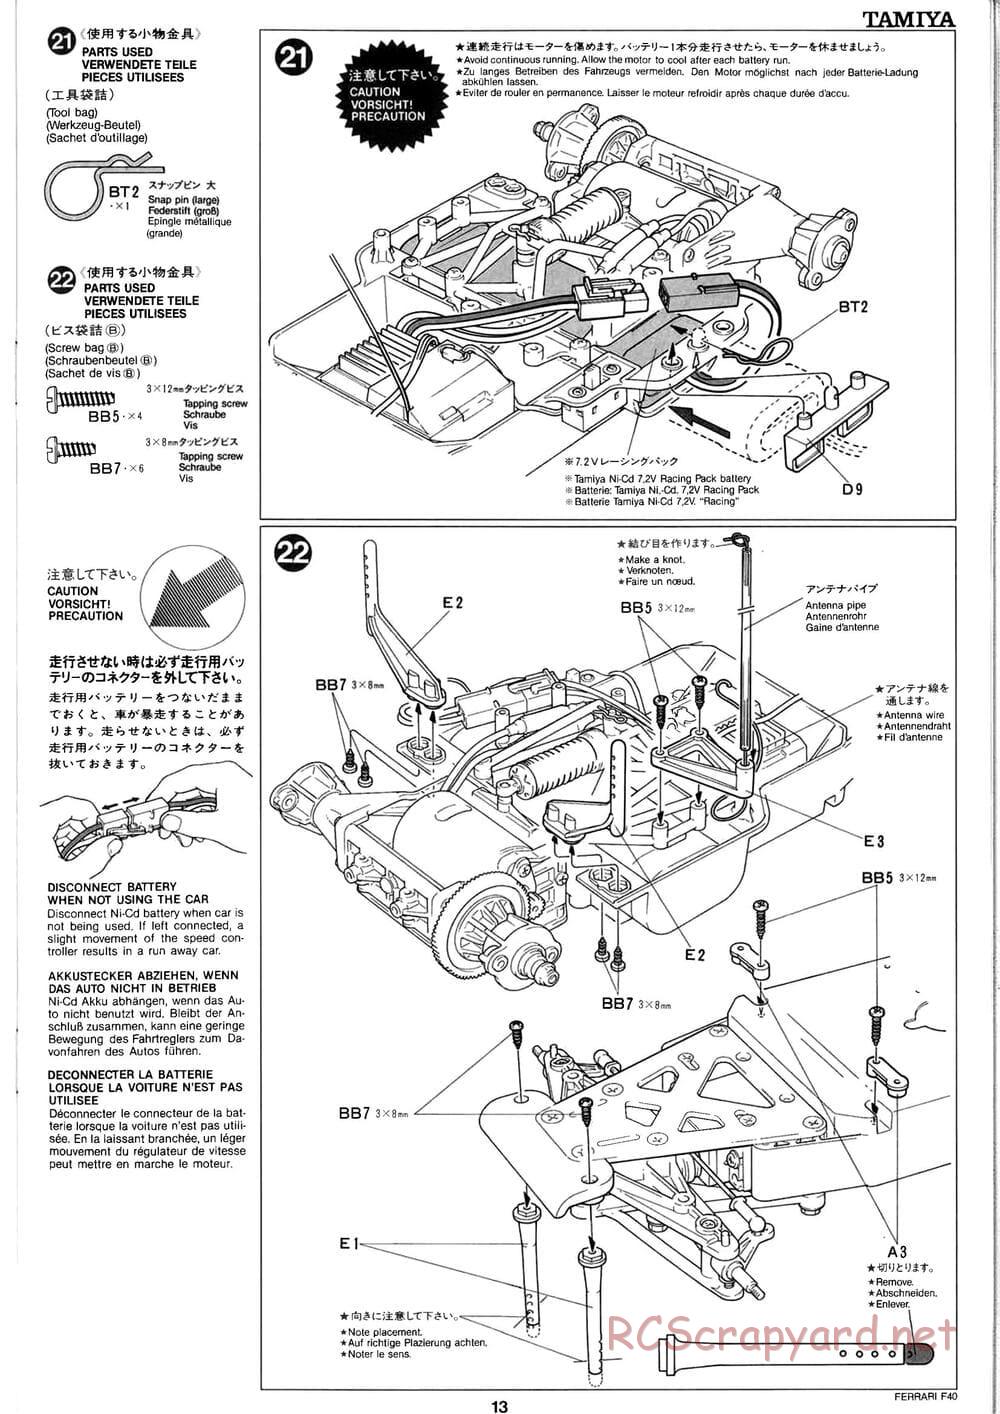 Tamiya - Ferrari F40 - Group-C Chassis - Manual - Page 13